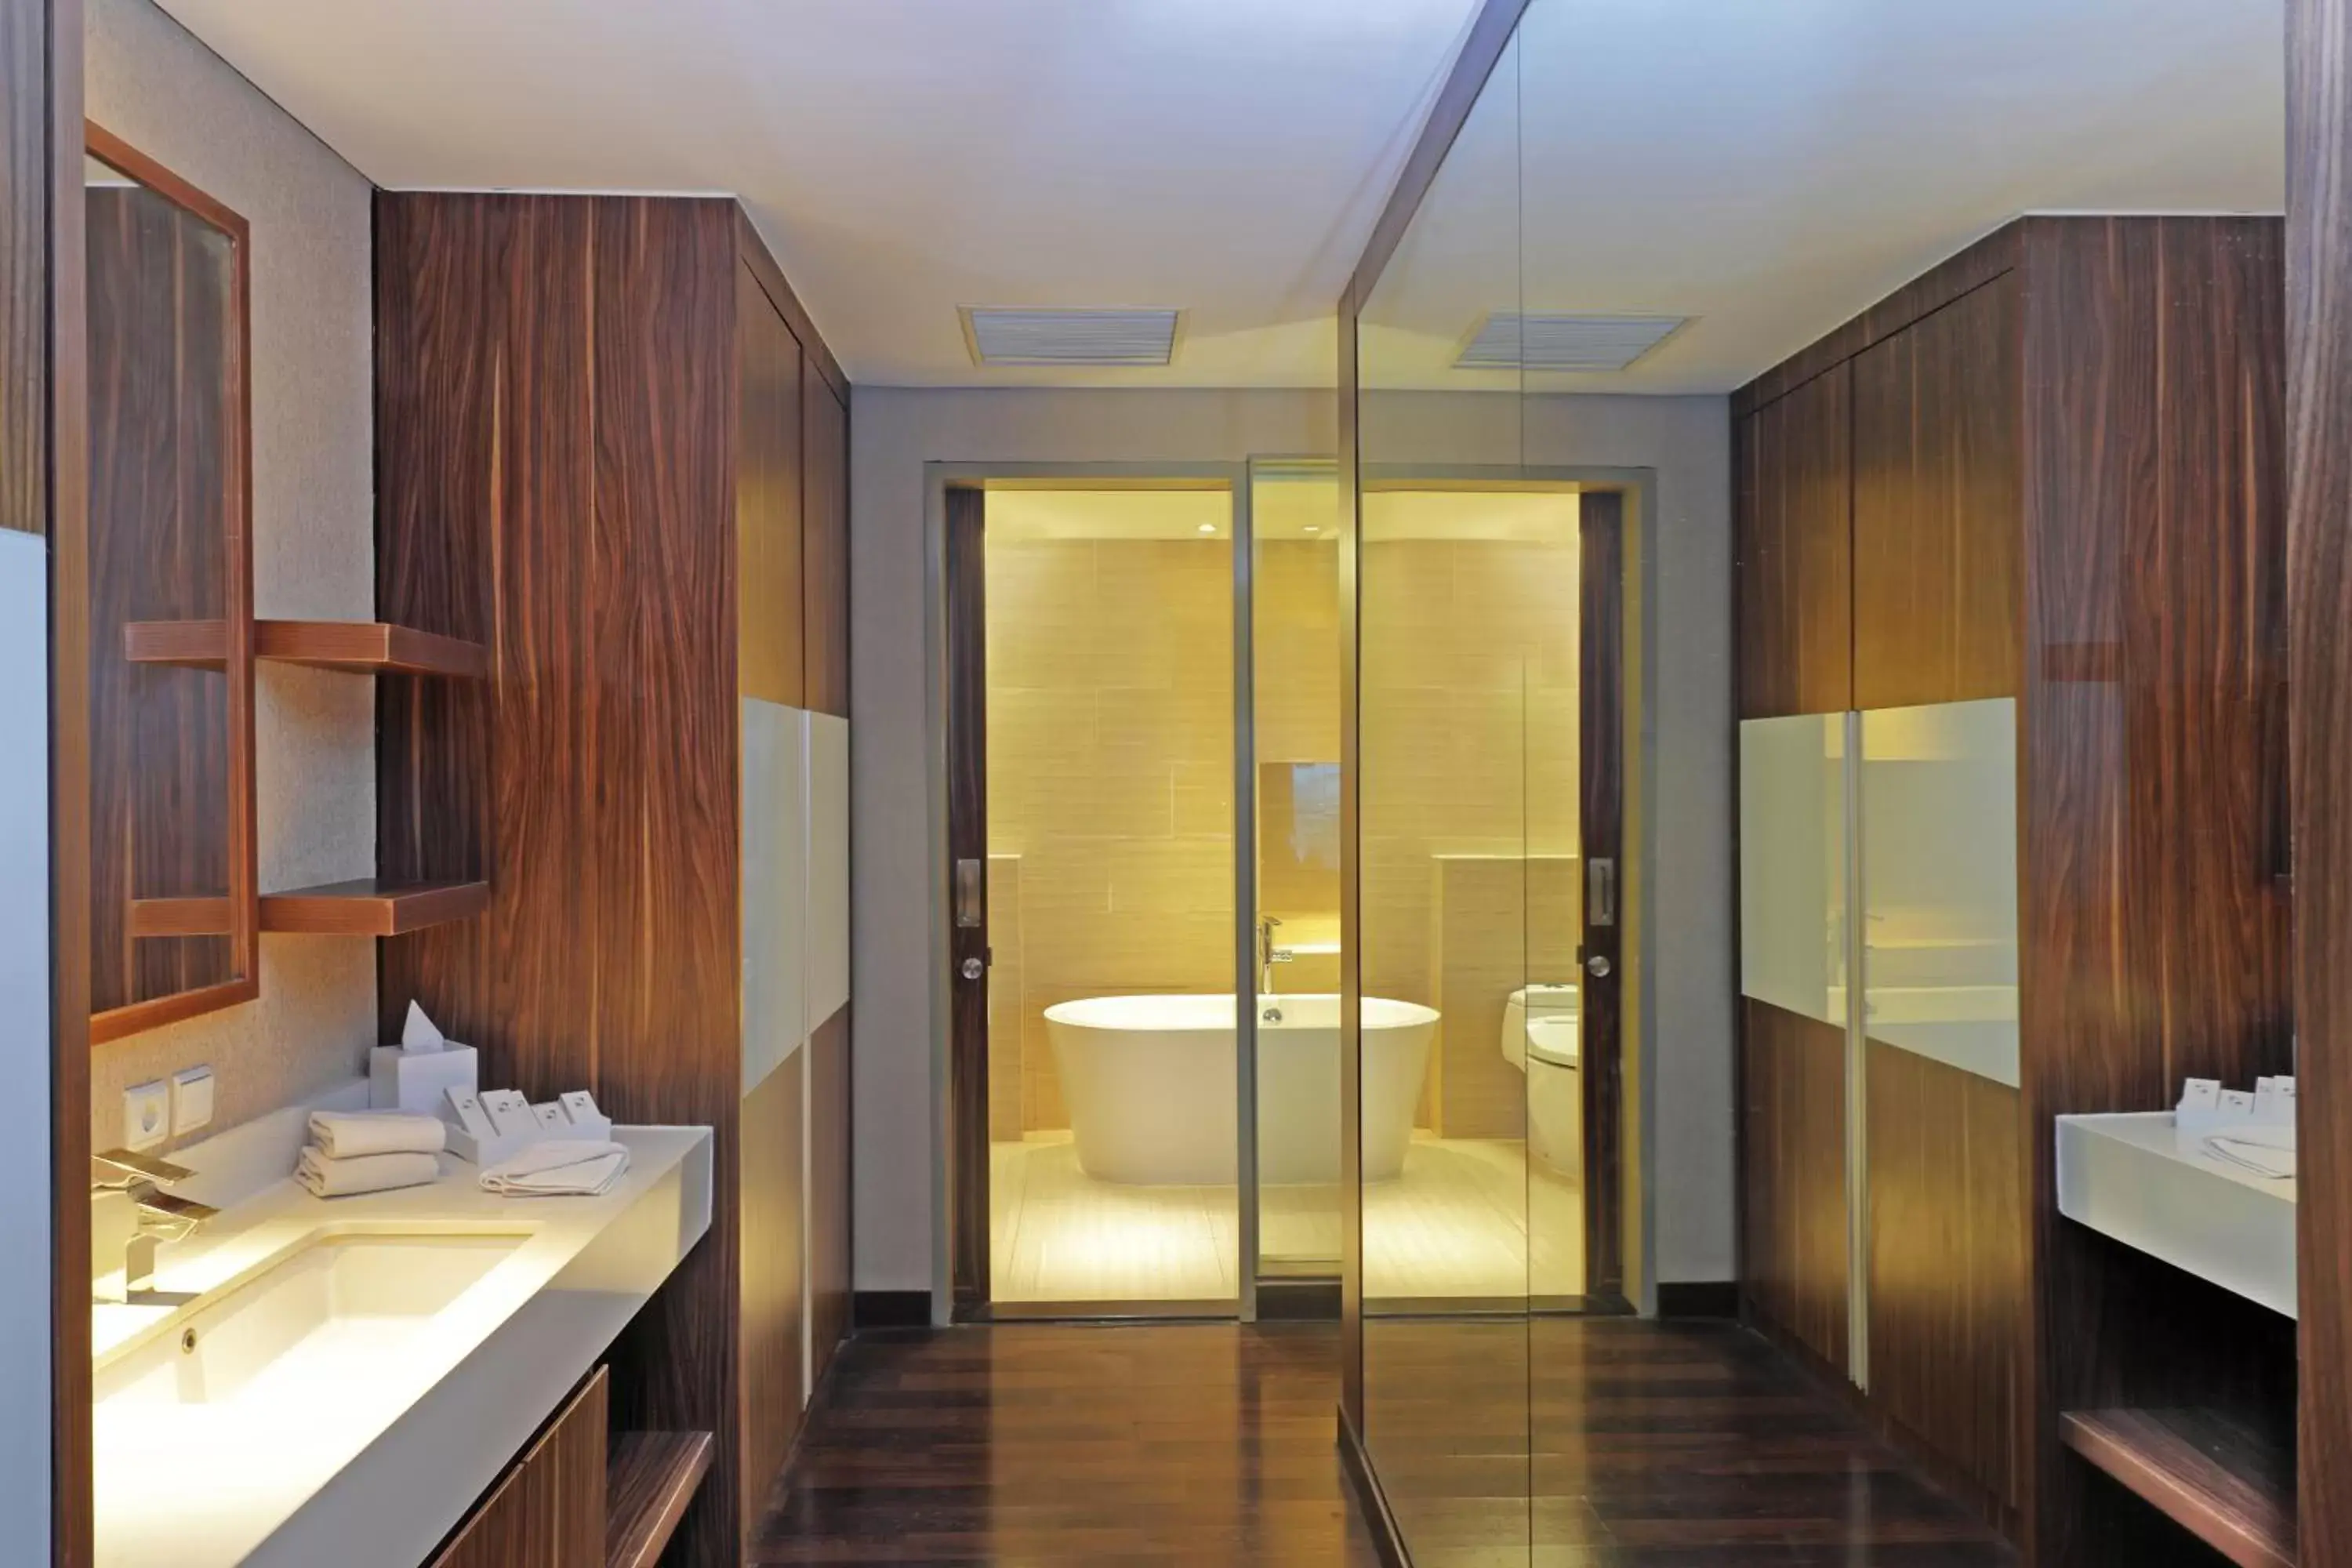 Area and facilities, Bathroom in Swiss-Belhotel Cirebon